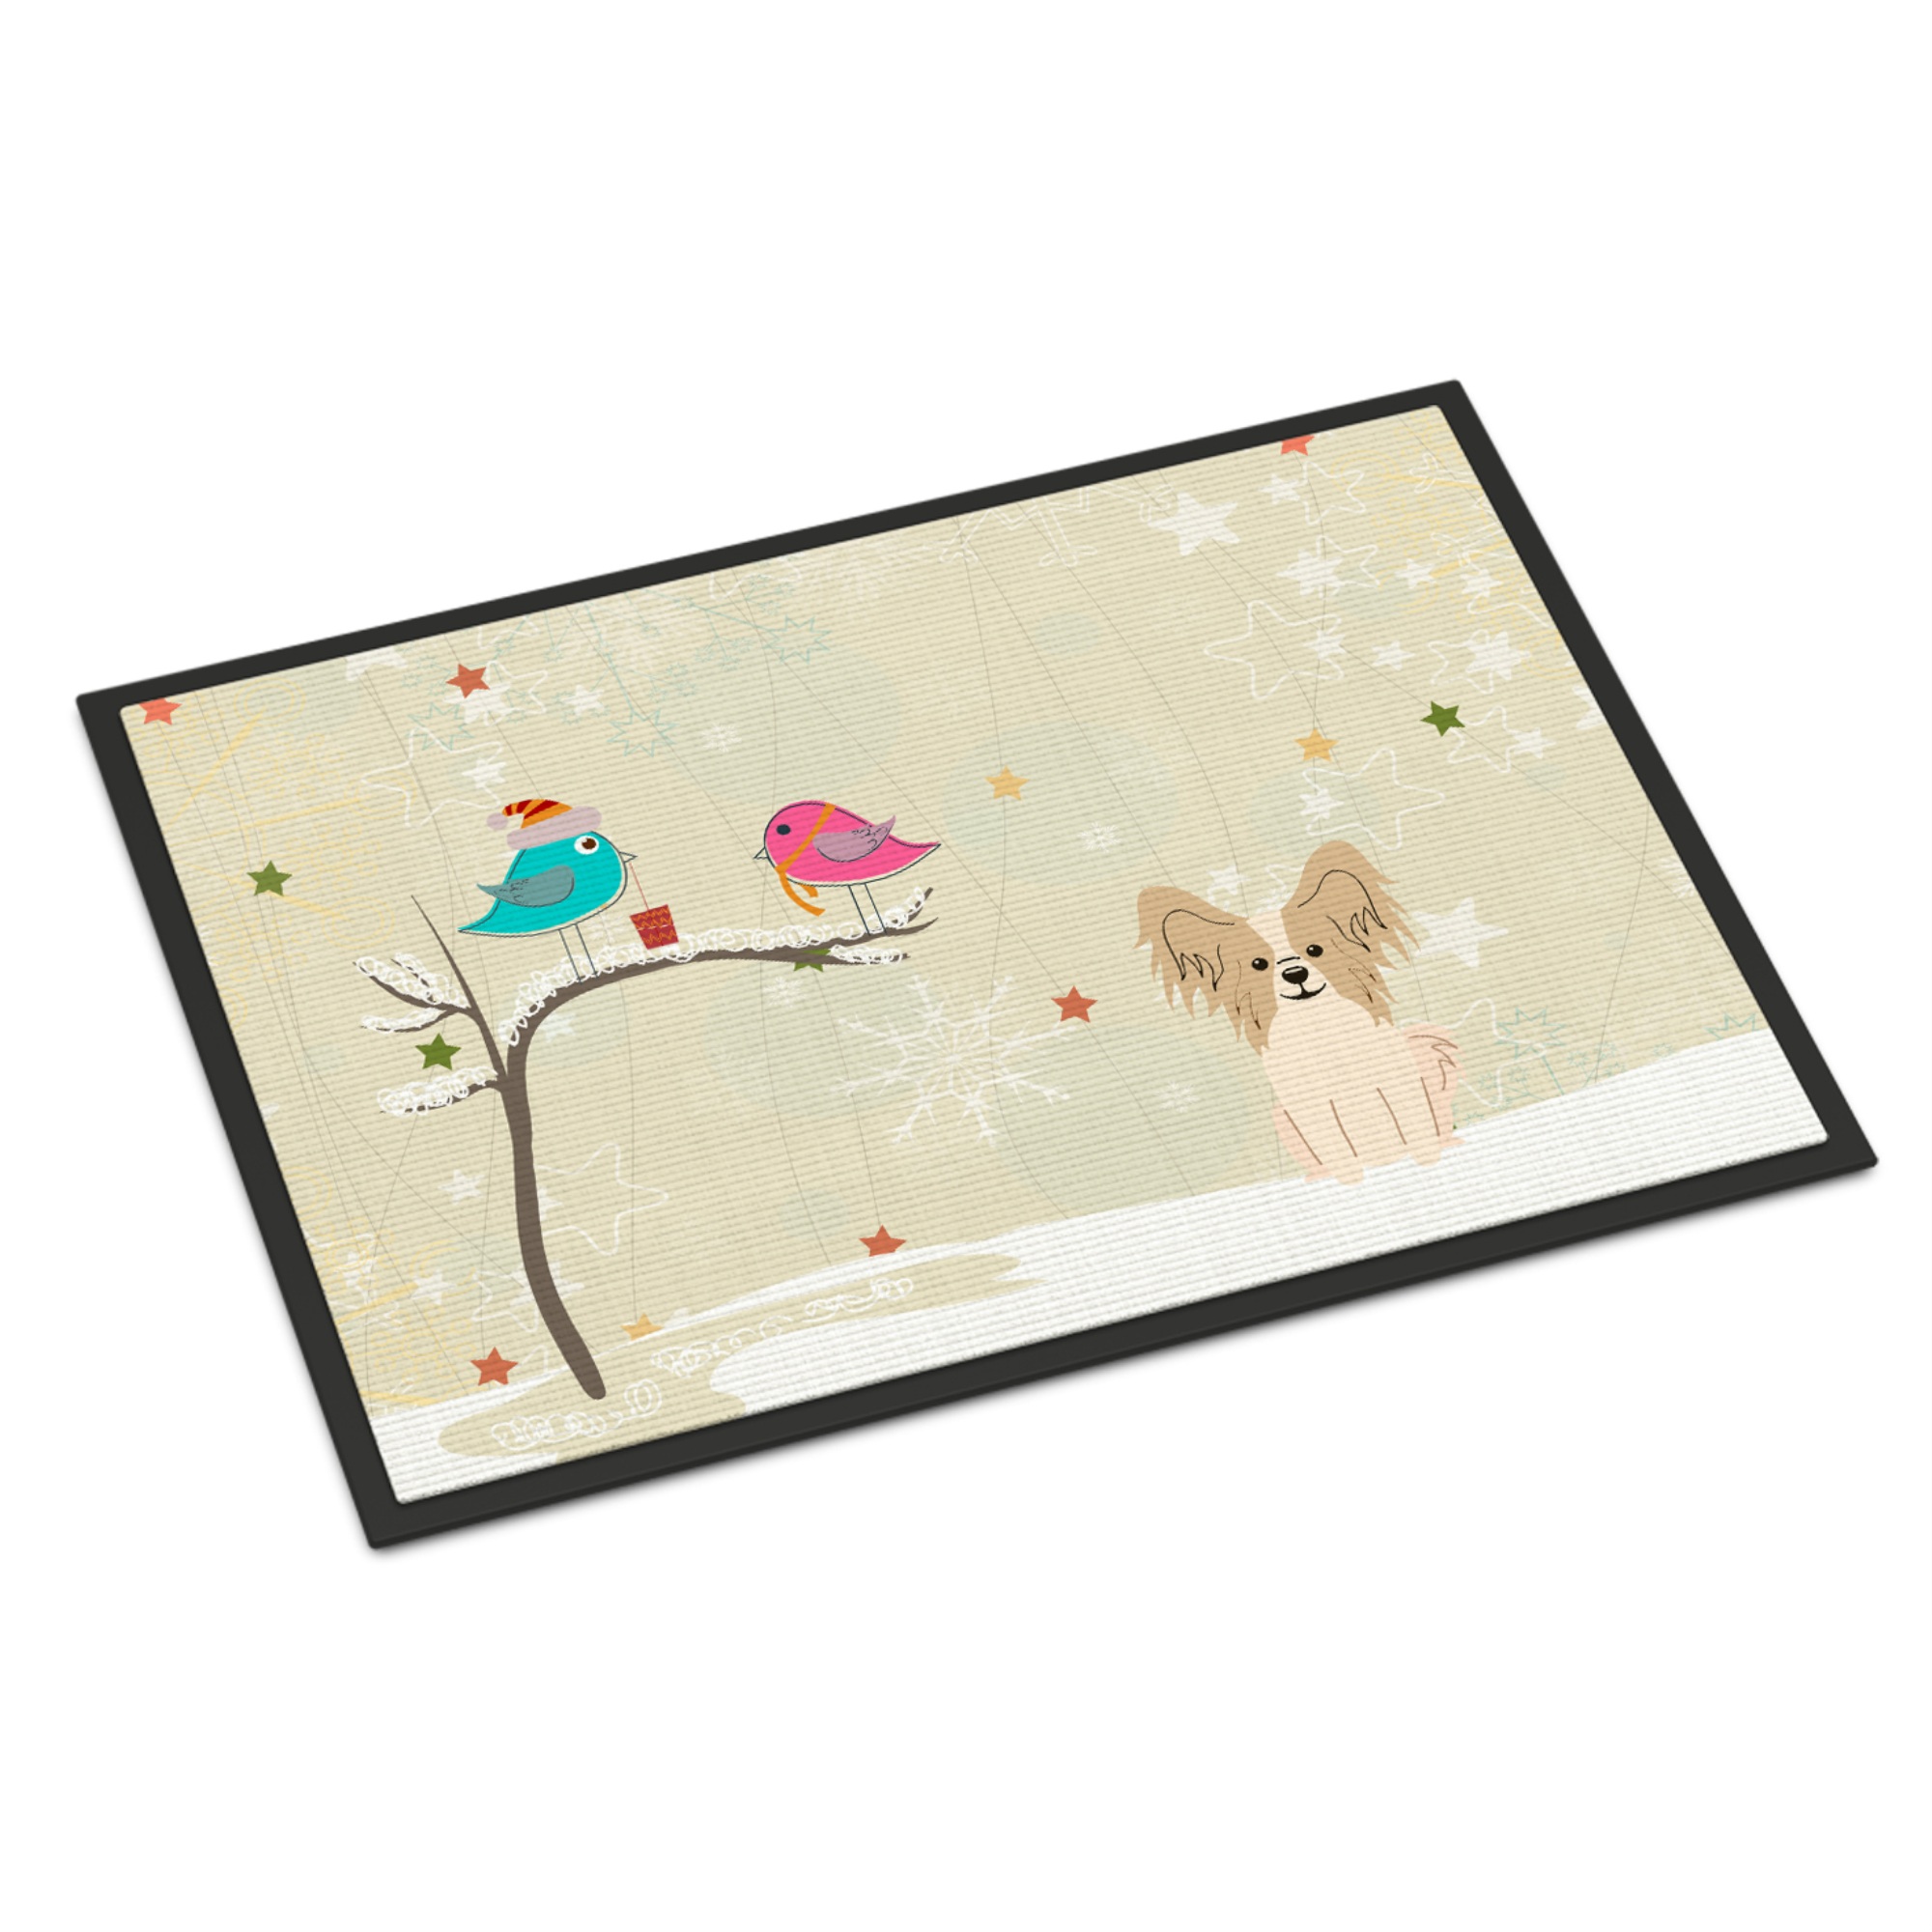 Caroline's Treasures Christmas Presents between Friends Papillon Sable White Indoor or Outdoor Mat 24x36 BB2549JMAT 24 x 36"" Multicolor"